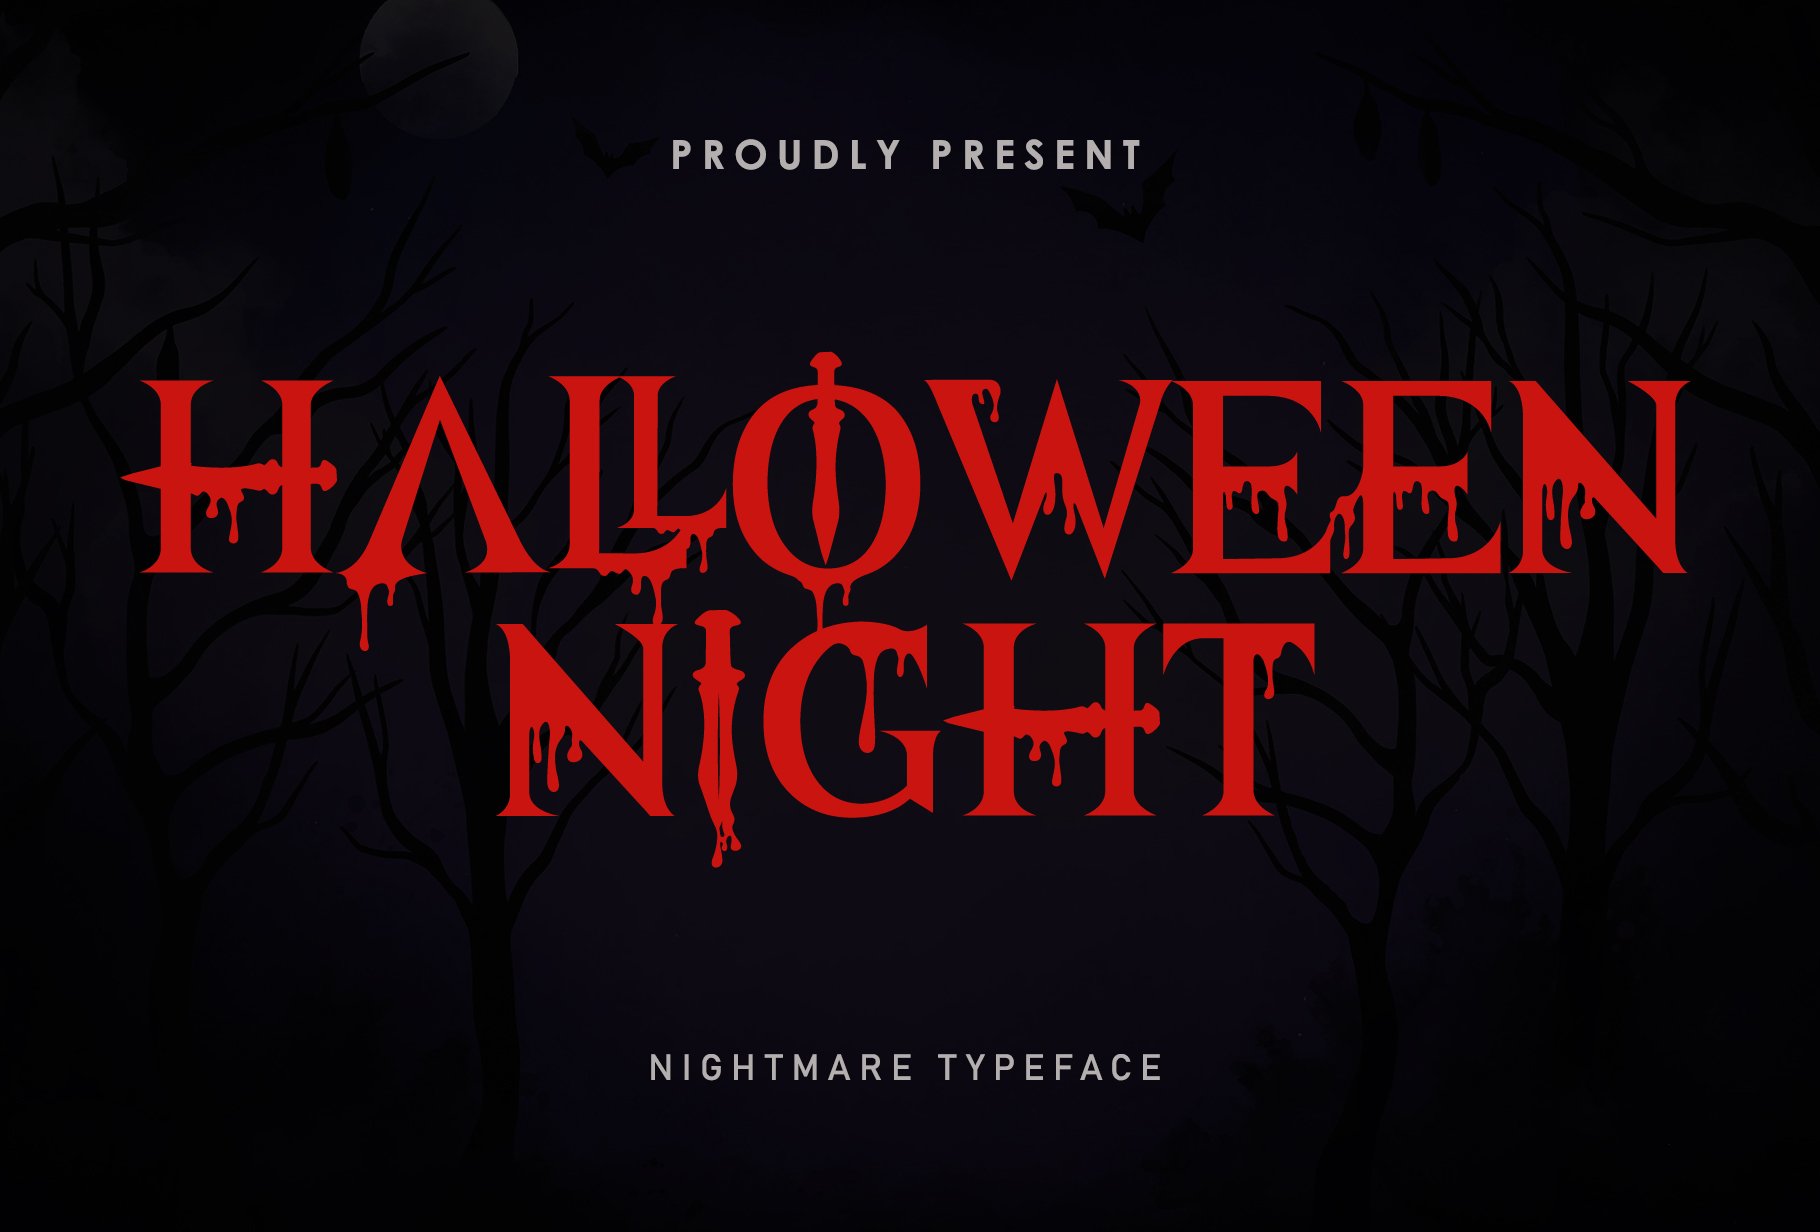 Halloween Night | Nightmare Typeface cover image.